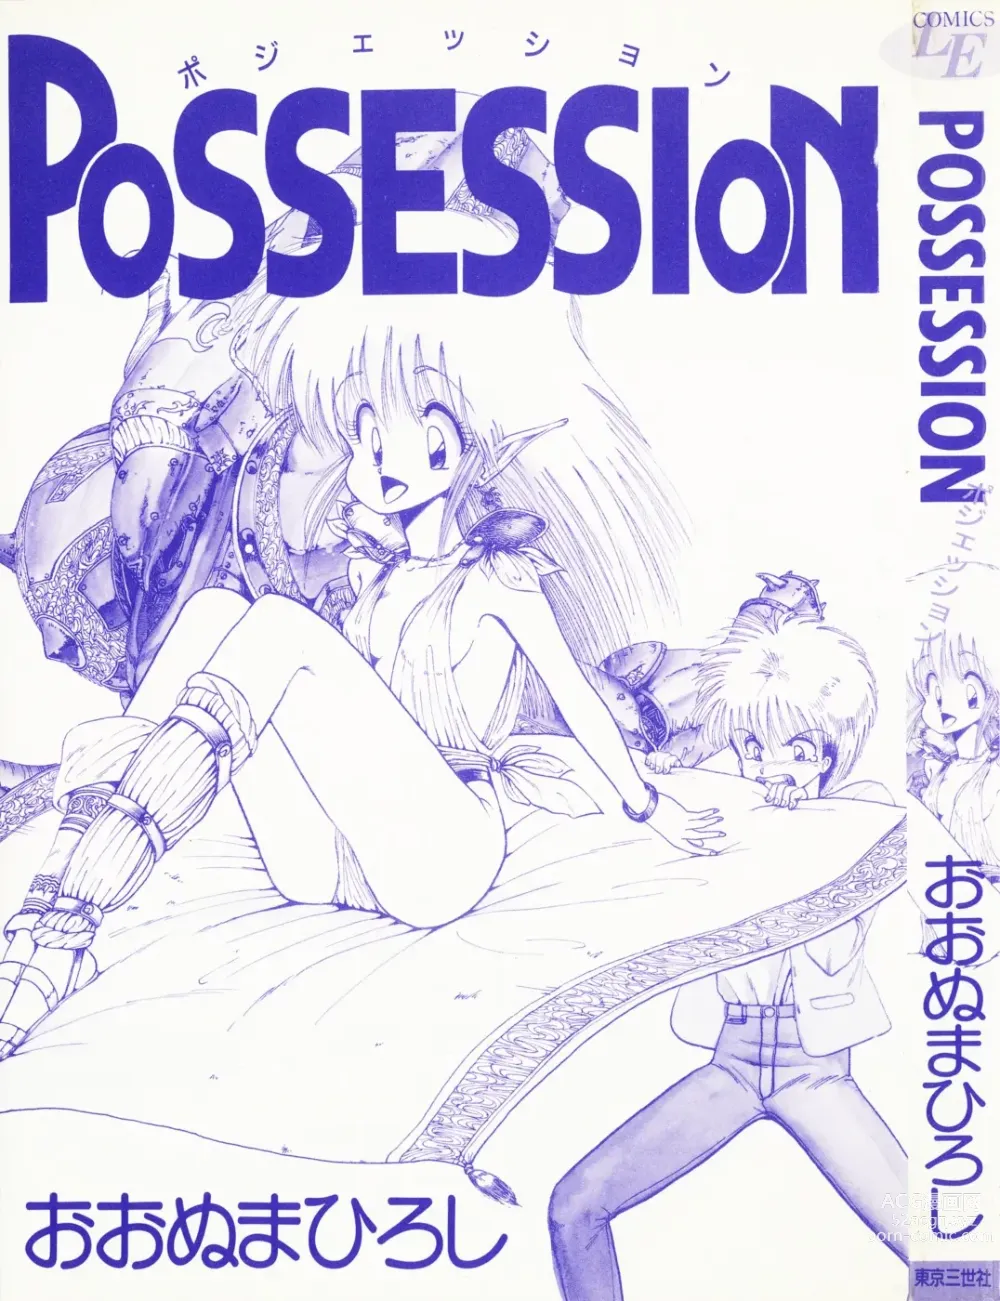 Page 5 of manga POSSESSION